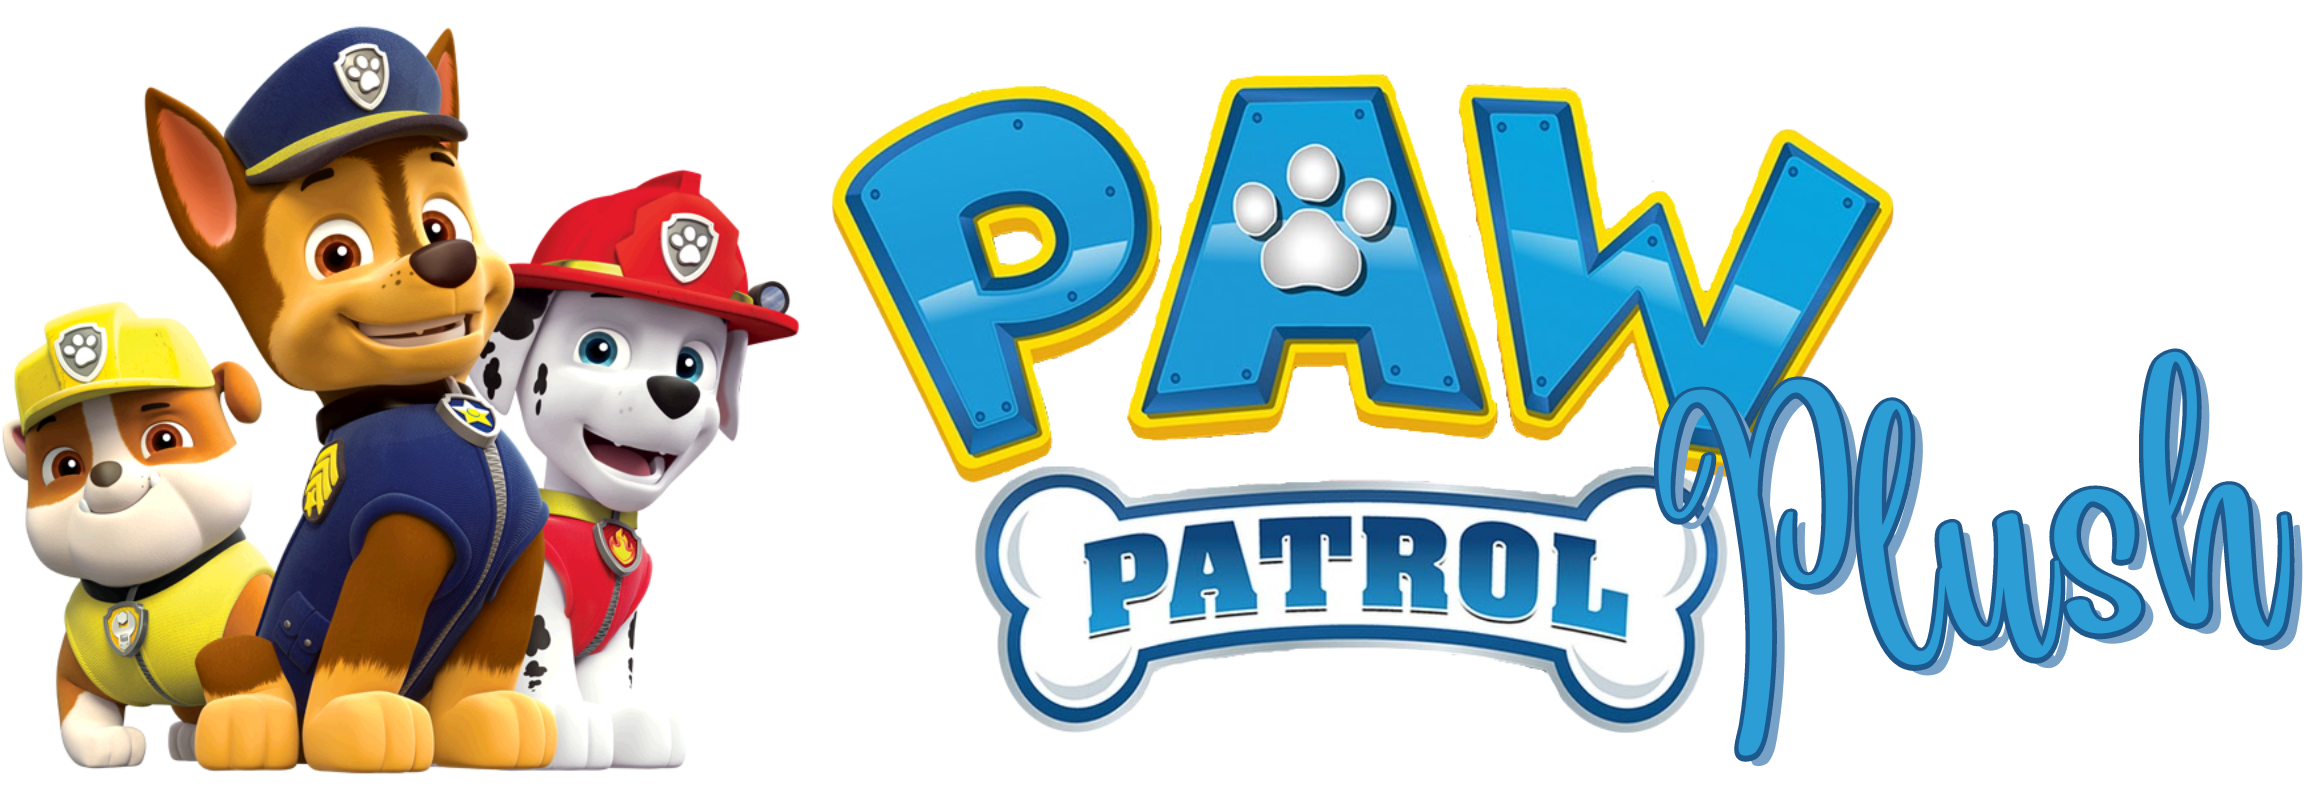 Paw patrol plush logo